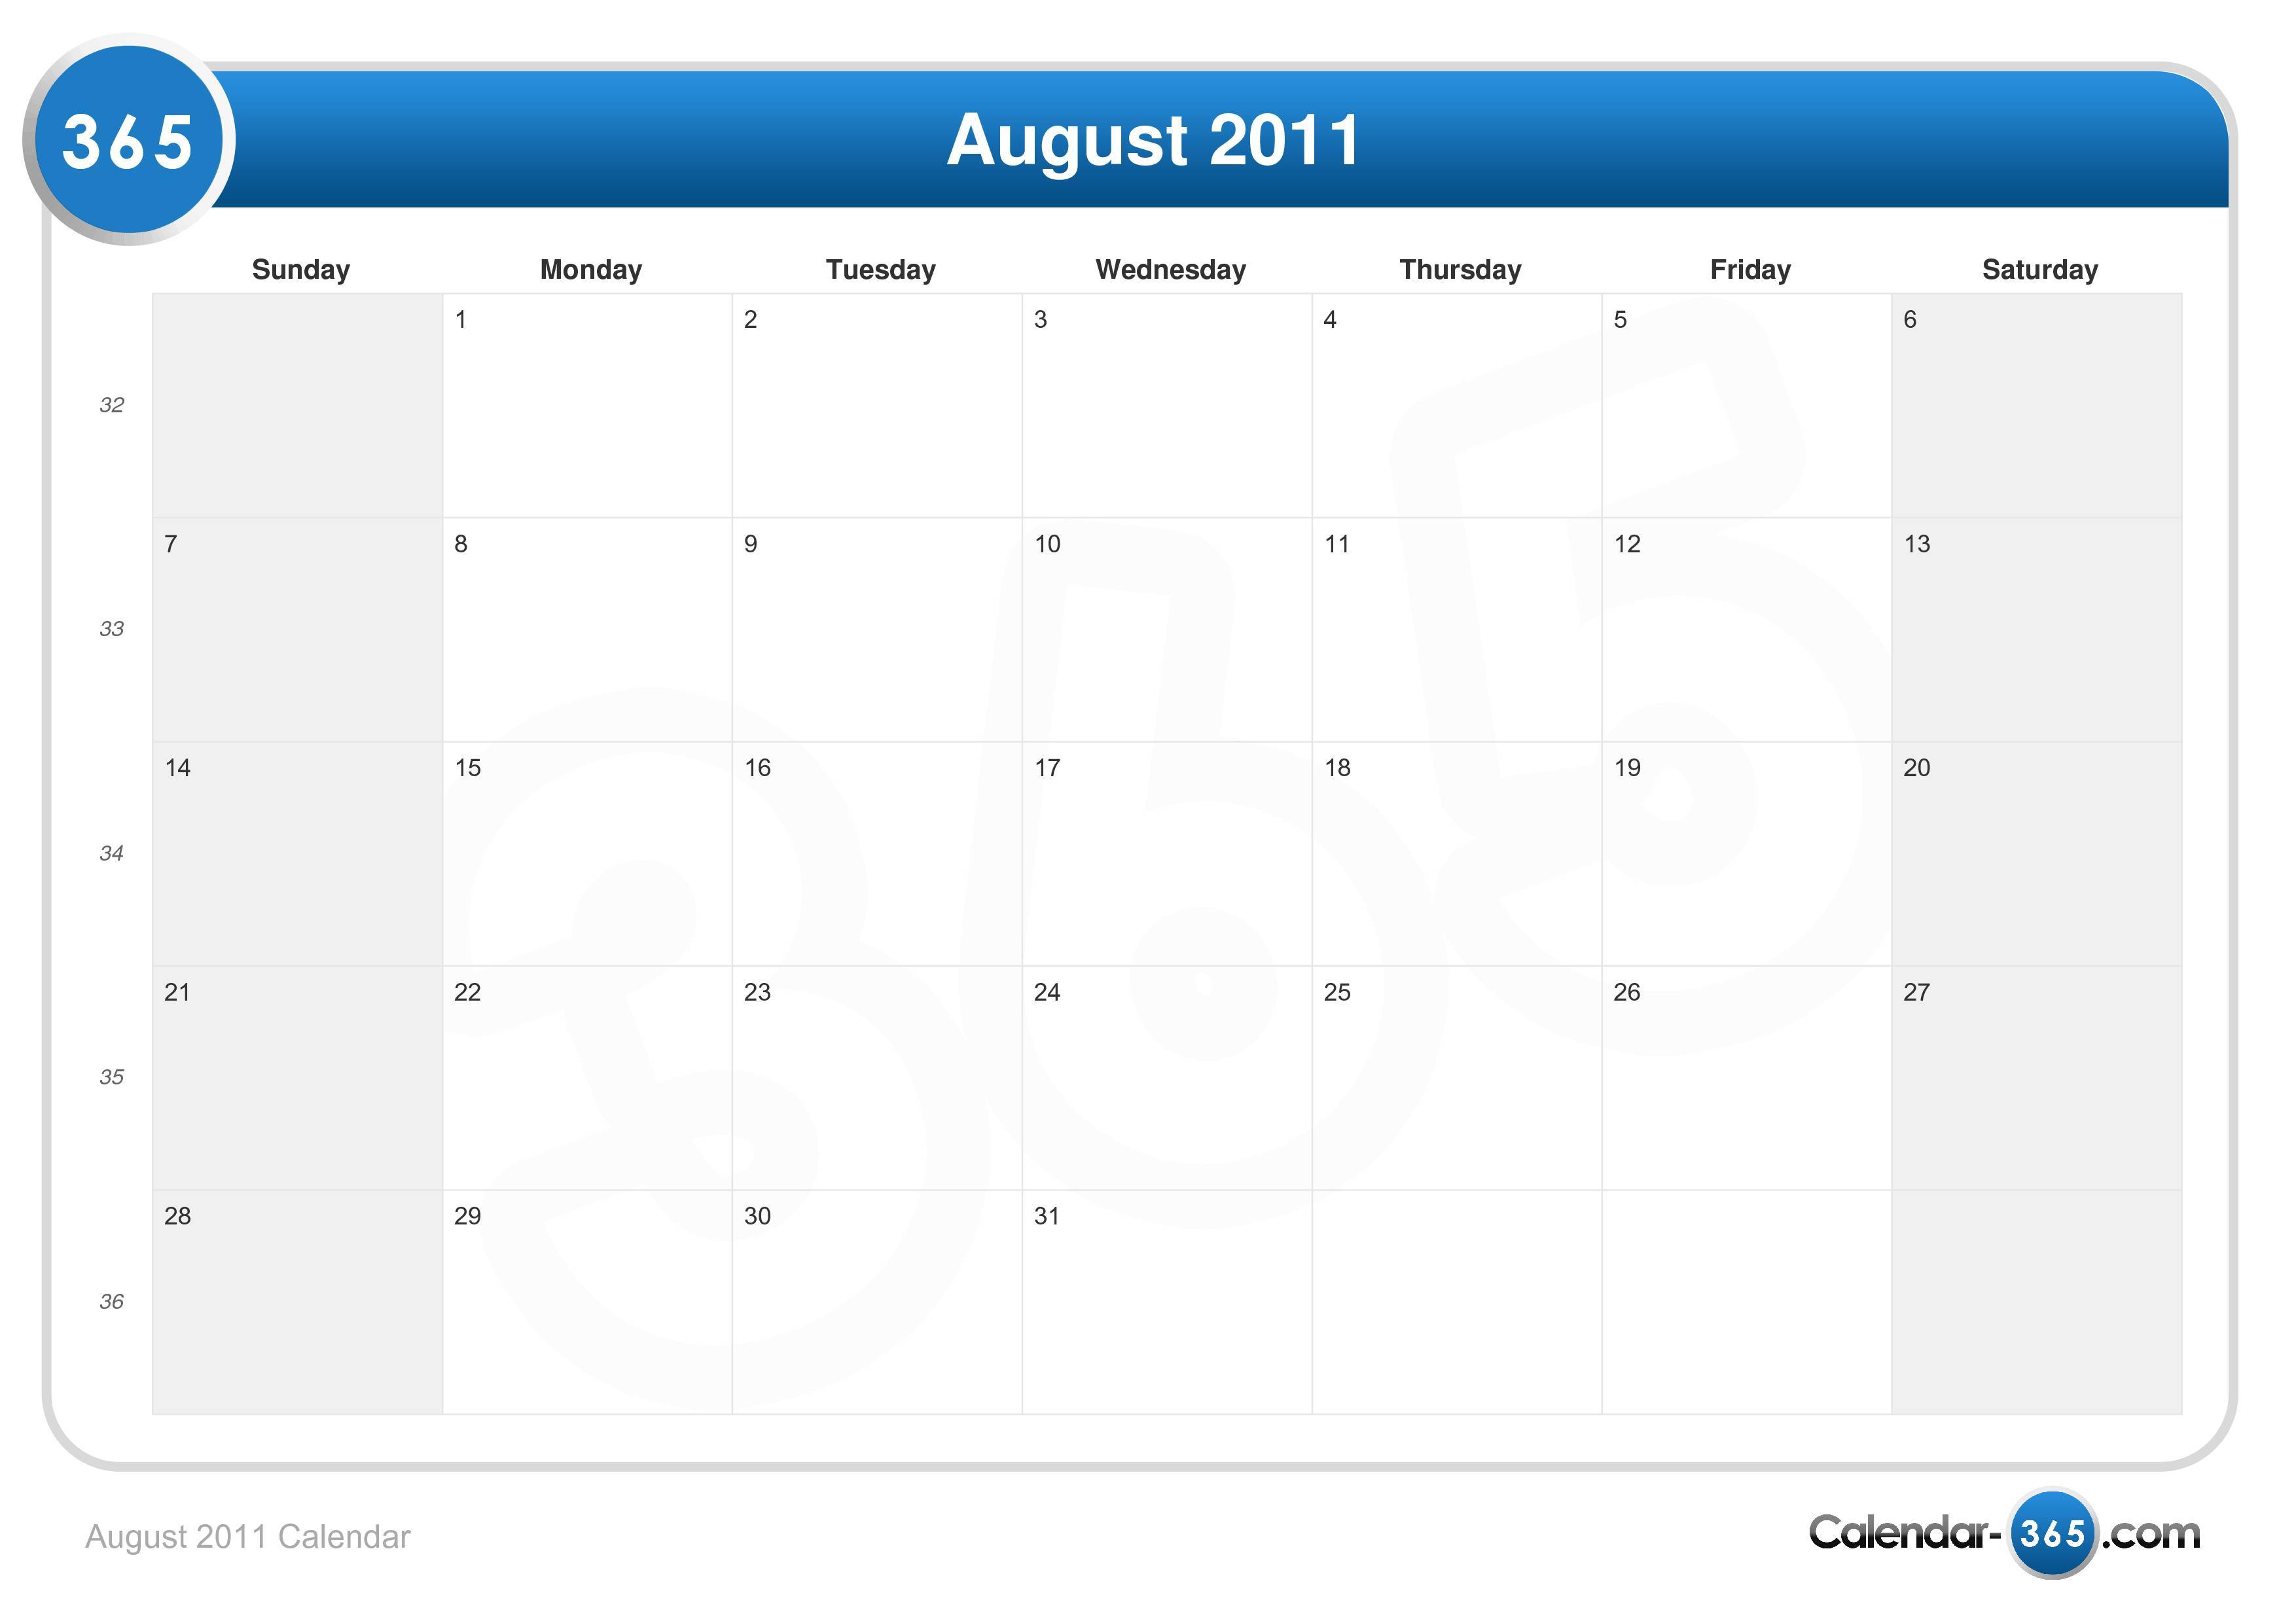 2011: August 2011 Blank Calendar